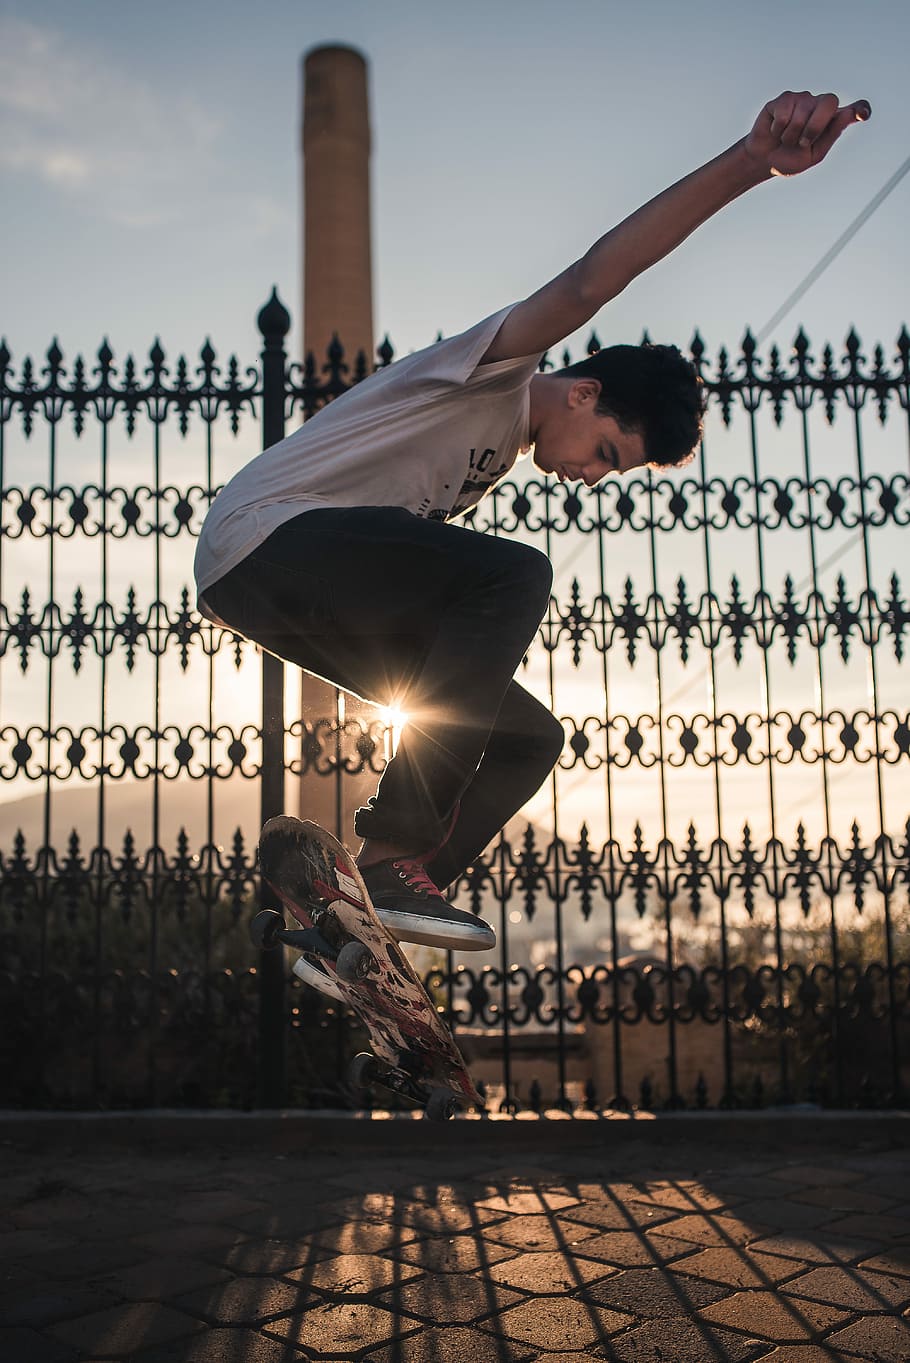 man doing skateboard trick near black steel fence during daytime, man doing tricks on the skateboard near metal fence